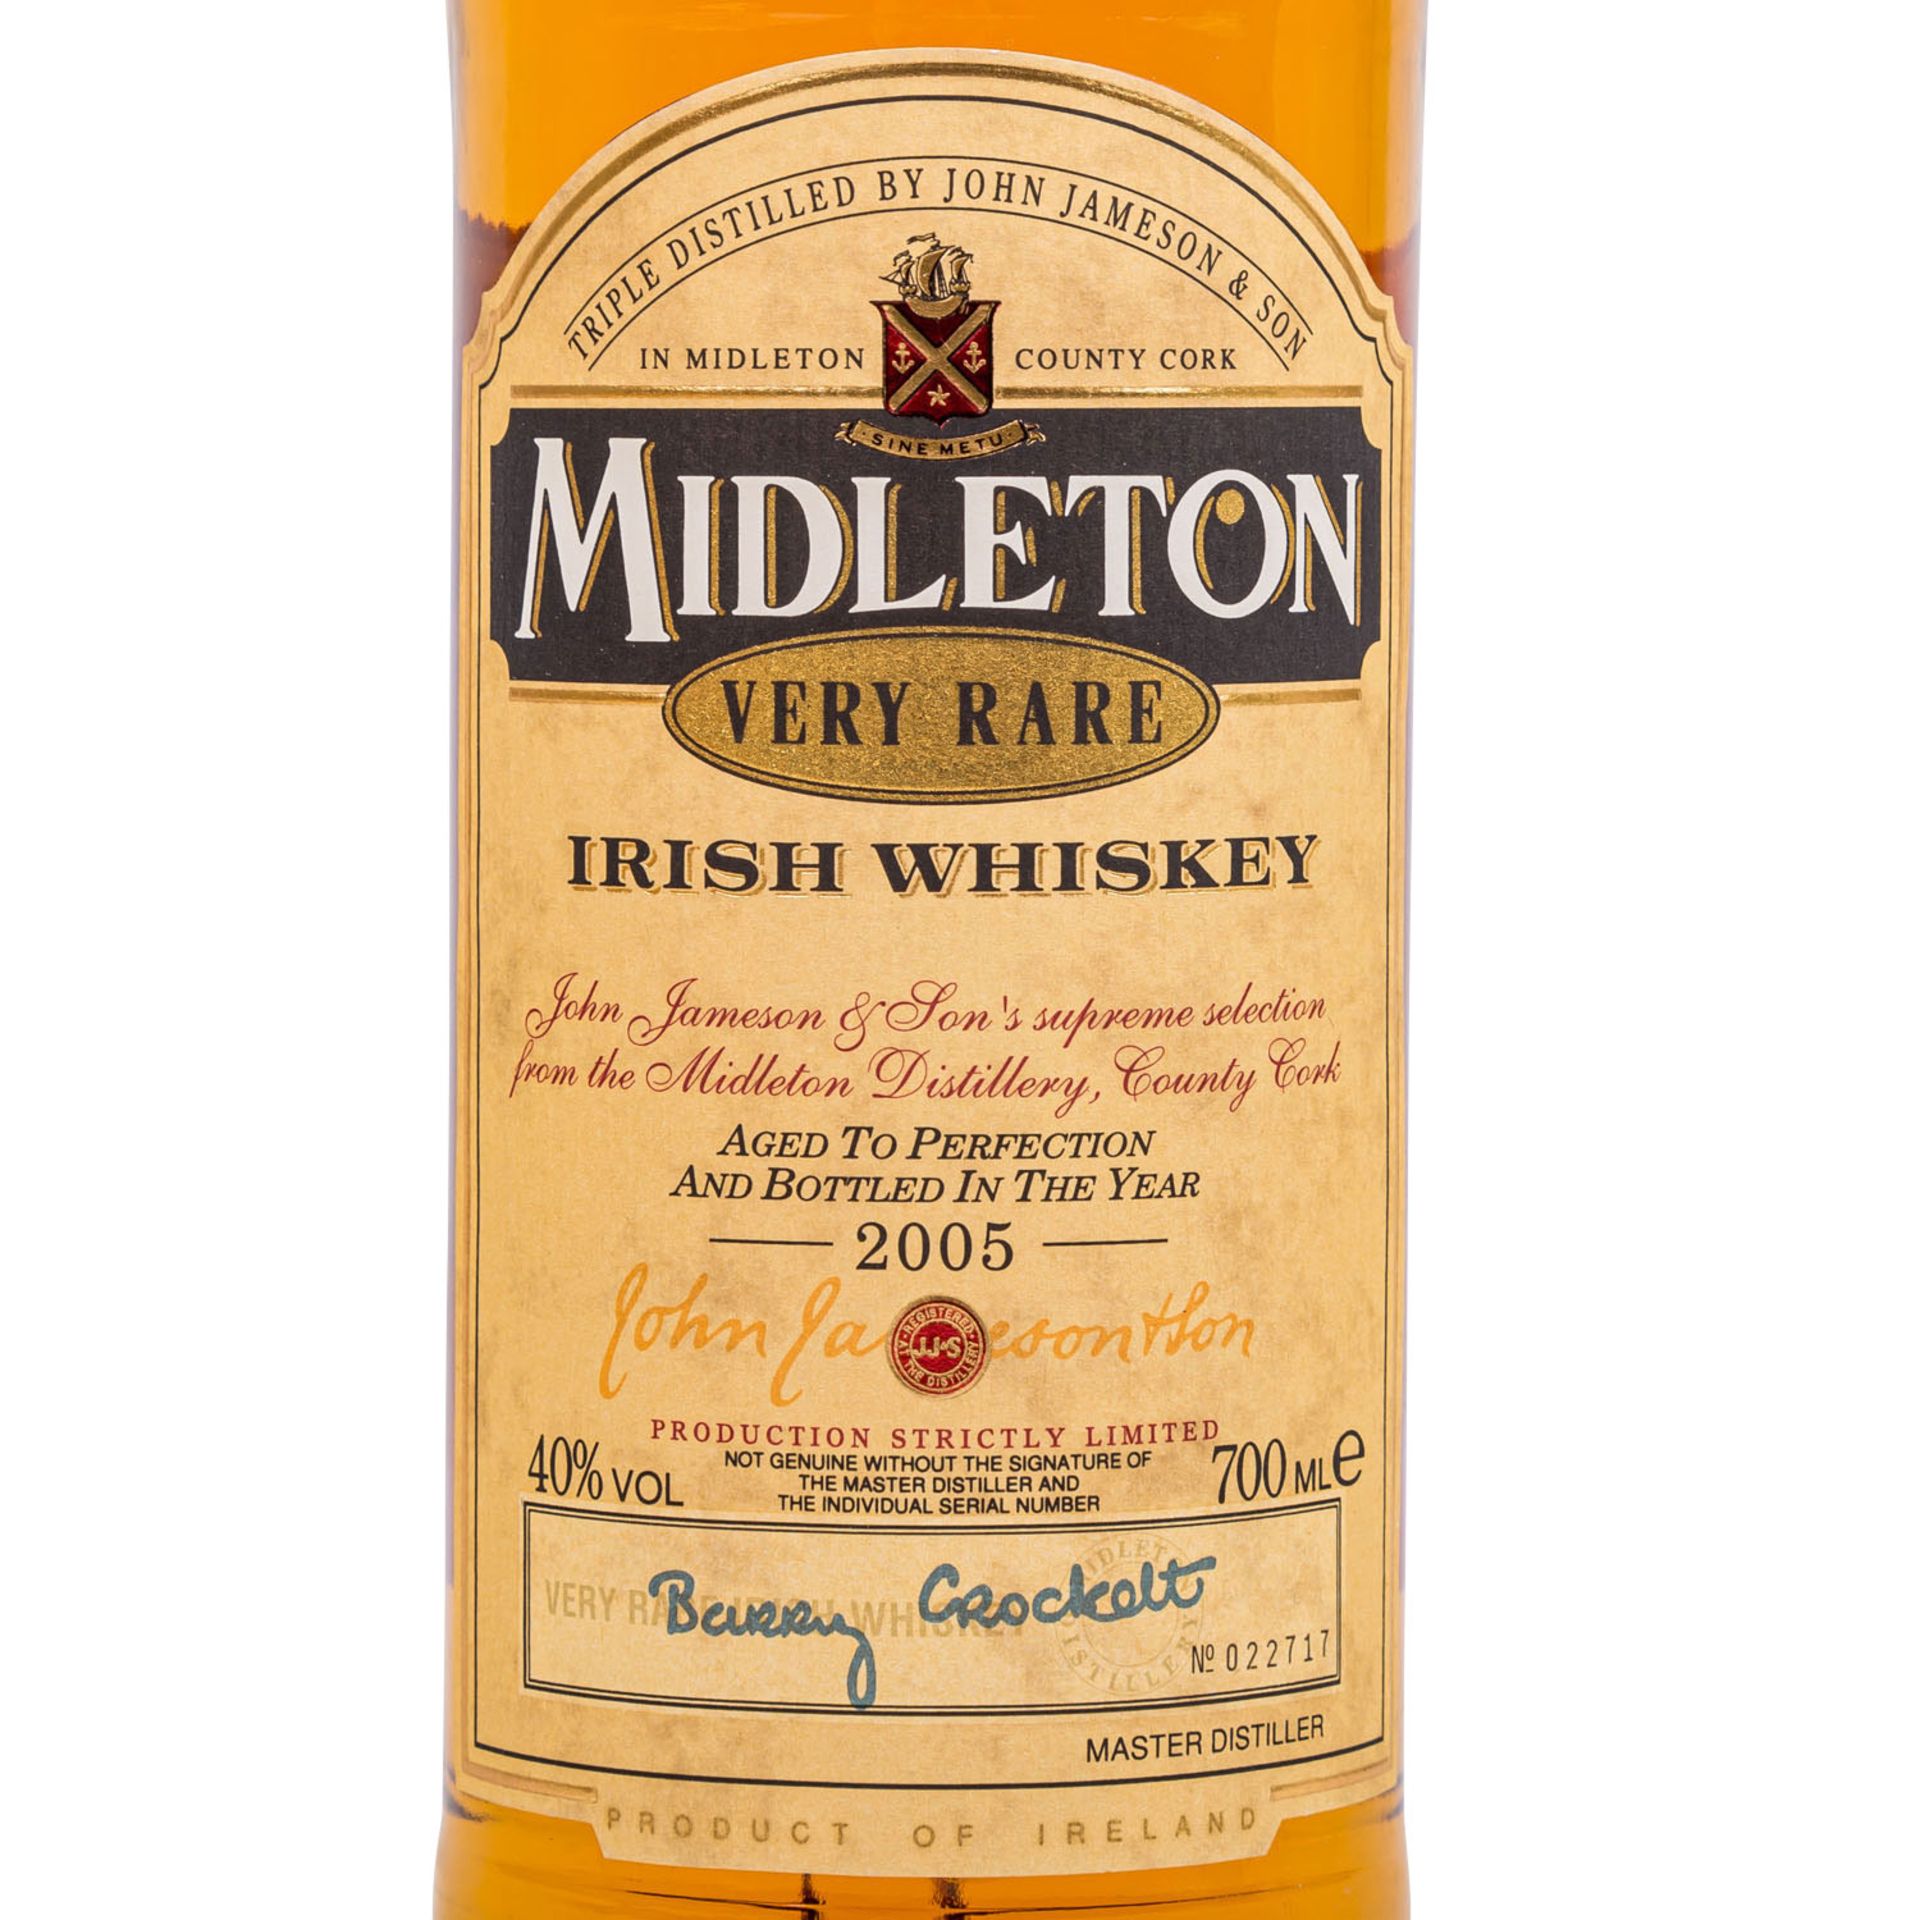 MIDDLETON Very Rare Irish Whiskey 2005 - Image 3 of 7